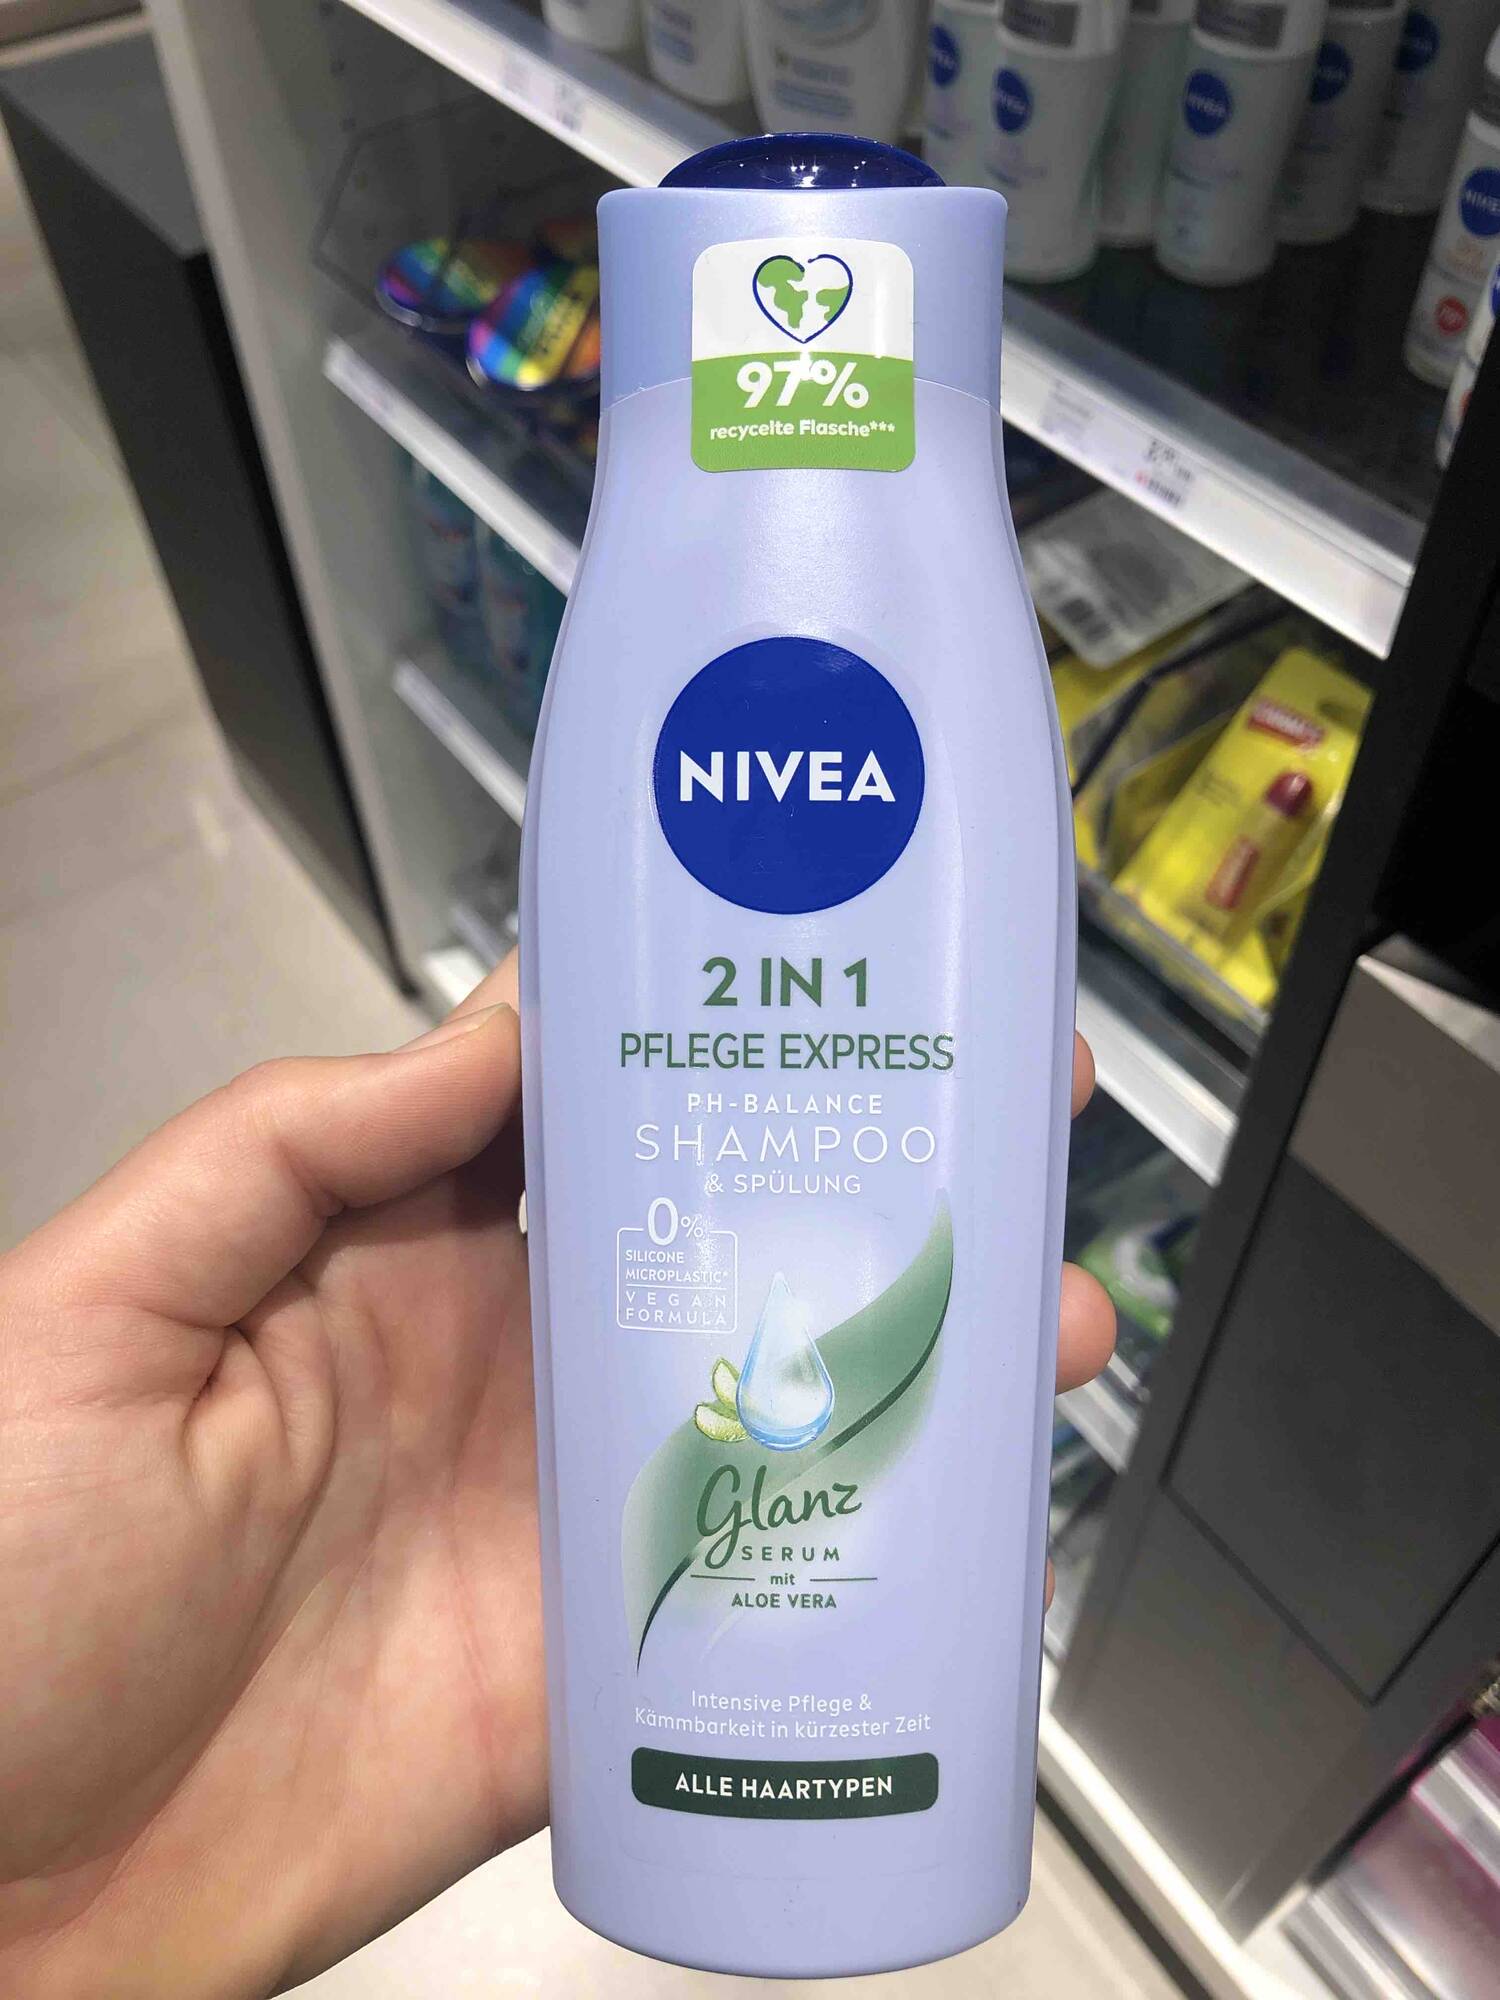 NIVEA - 2 in 1 Pflege express shampoo